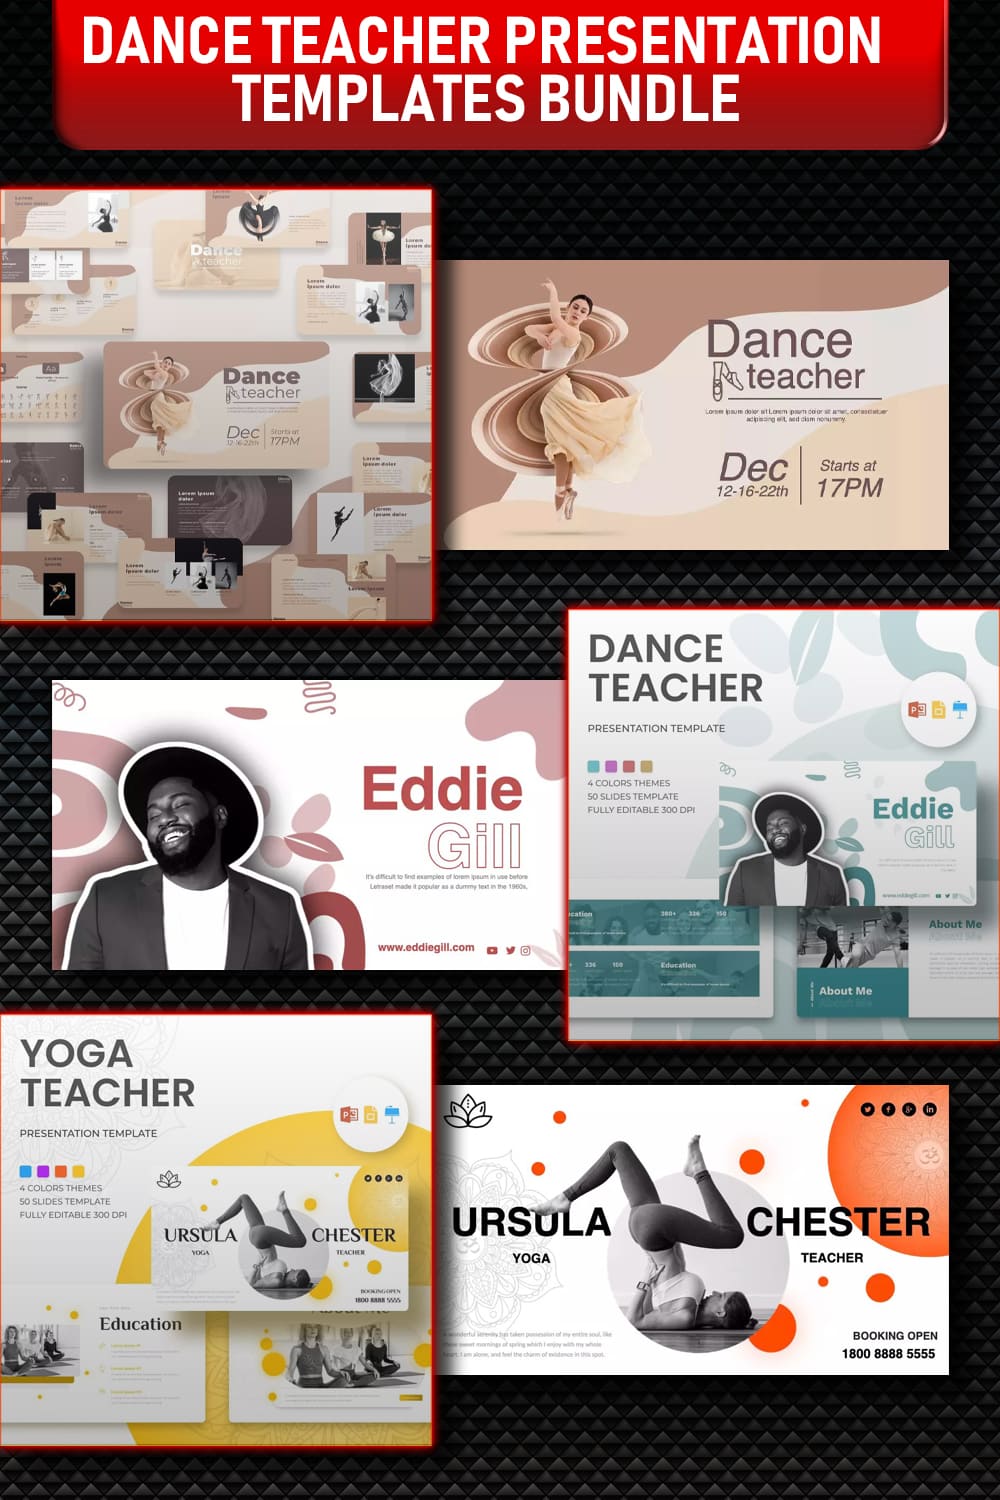 Dance teacher presentation templates bundle of pinterest.